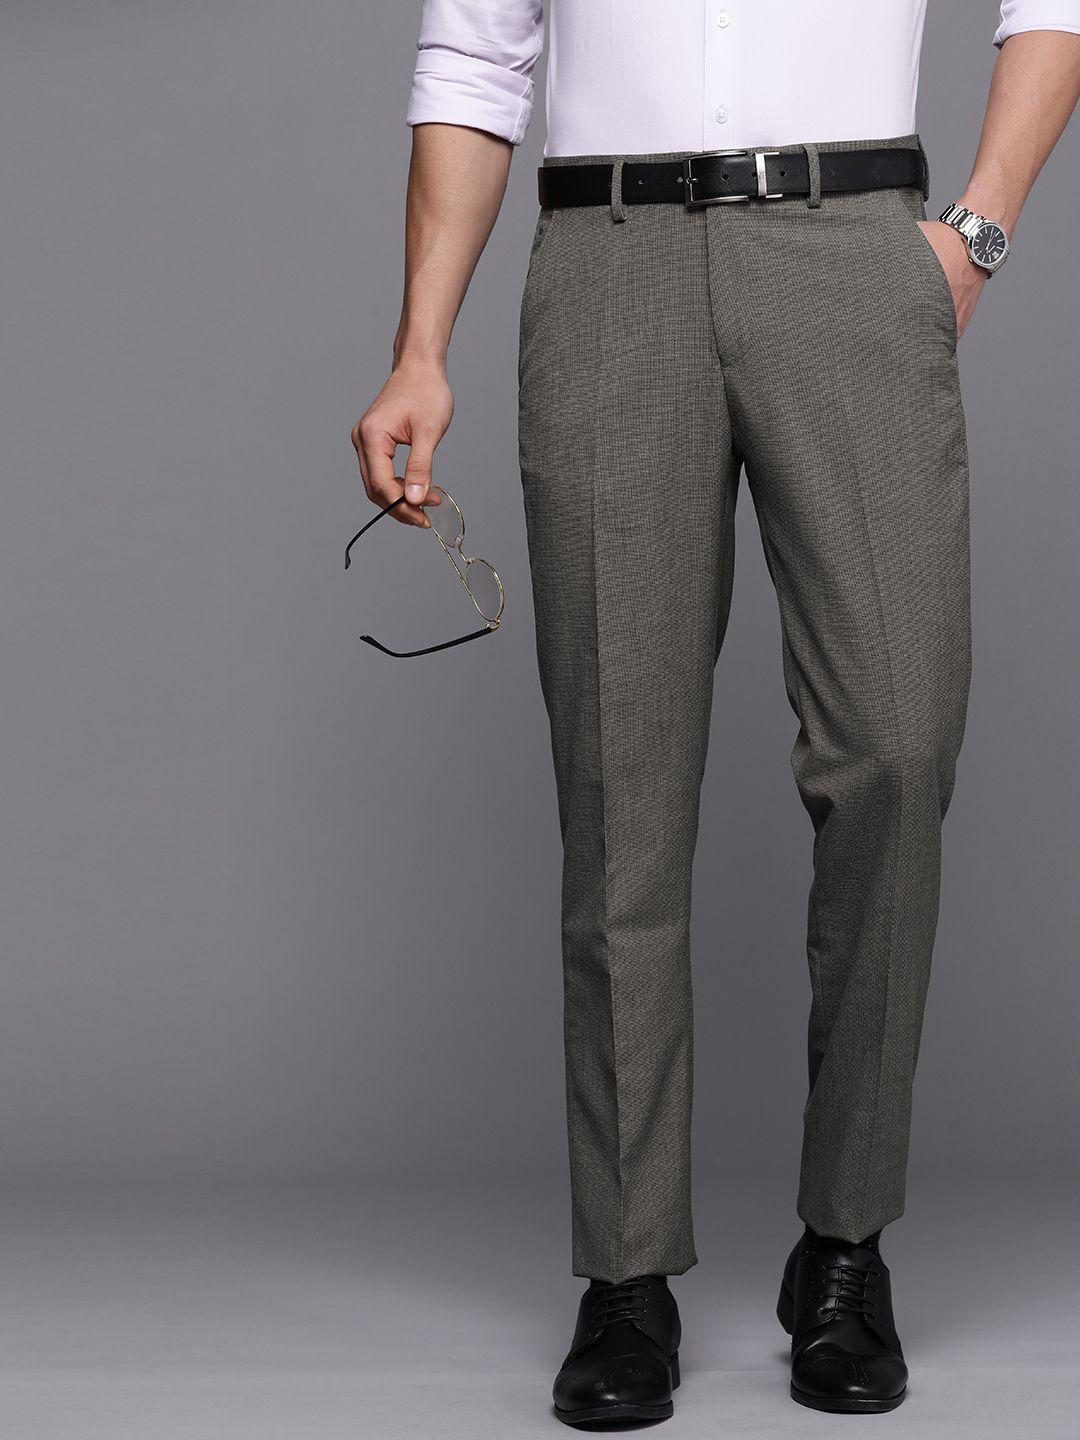 louis-philippe-men-grey-slim-fit-formal-trousers